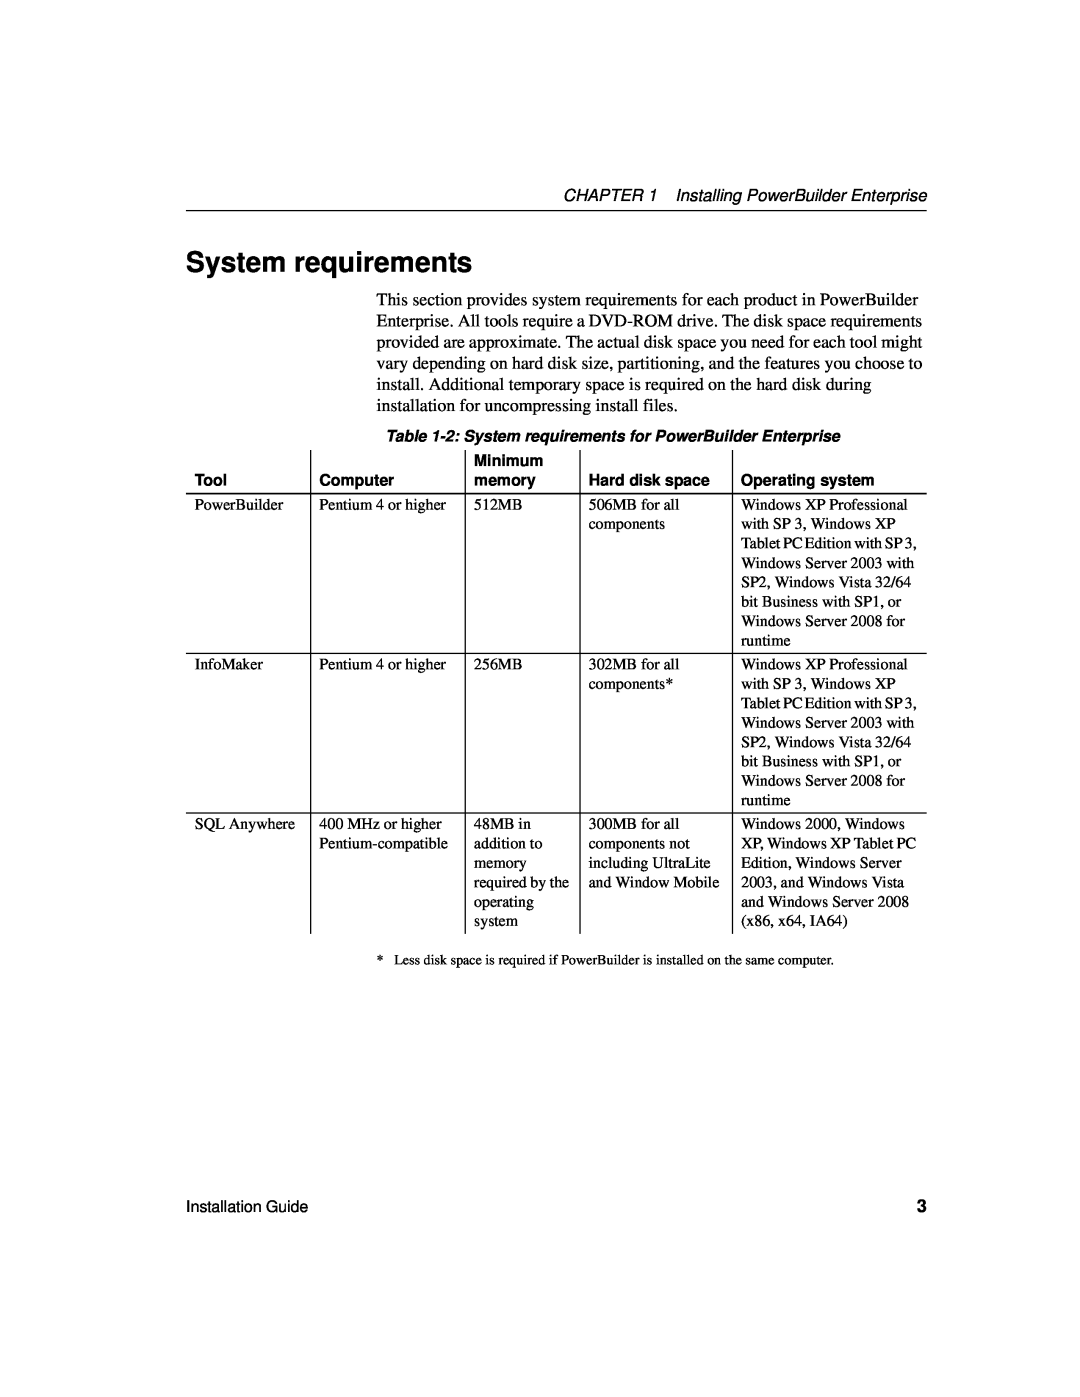 Sybase 6131765115041SS manual System requirements, Installing PowerBuilder Enterprise, Minimum, Tool, Computer, memory 